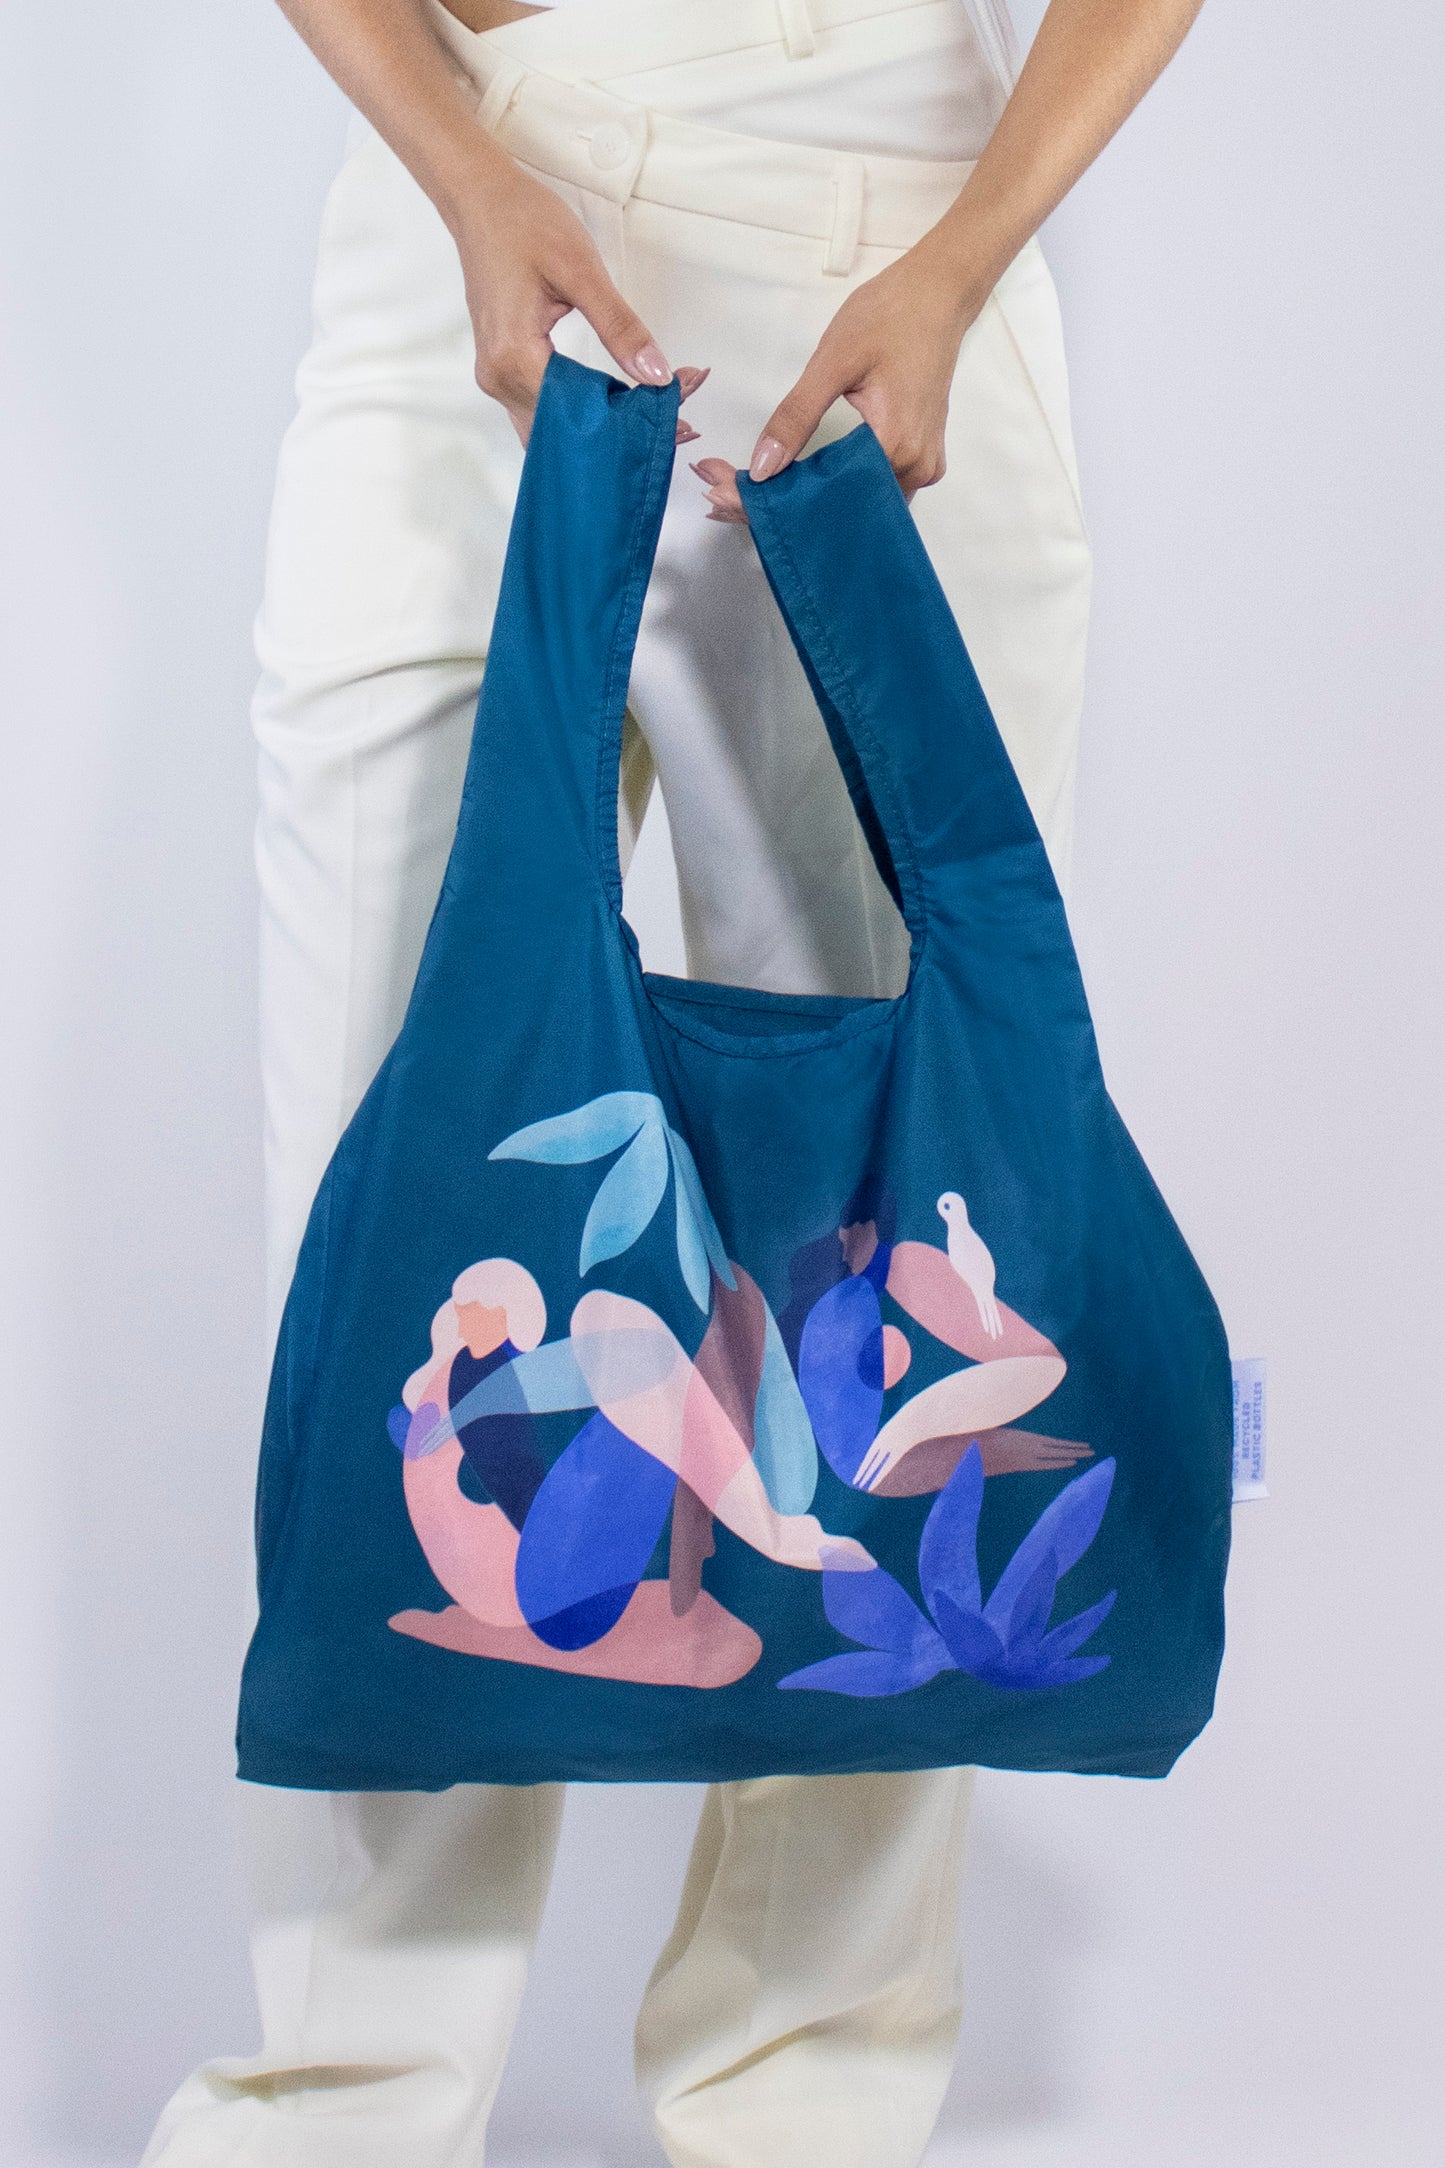 Kind Bag Recycled Plastic Reusable Bag Maggie Stephenson Spellbinding Singapore